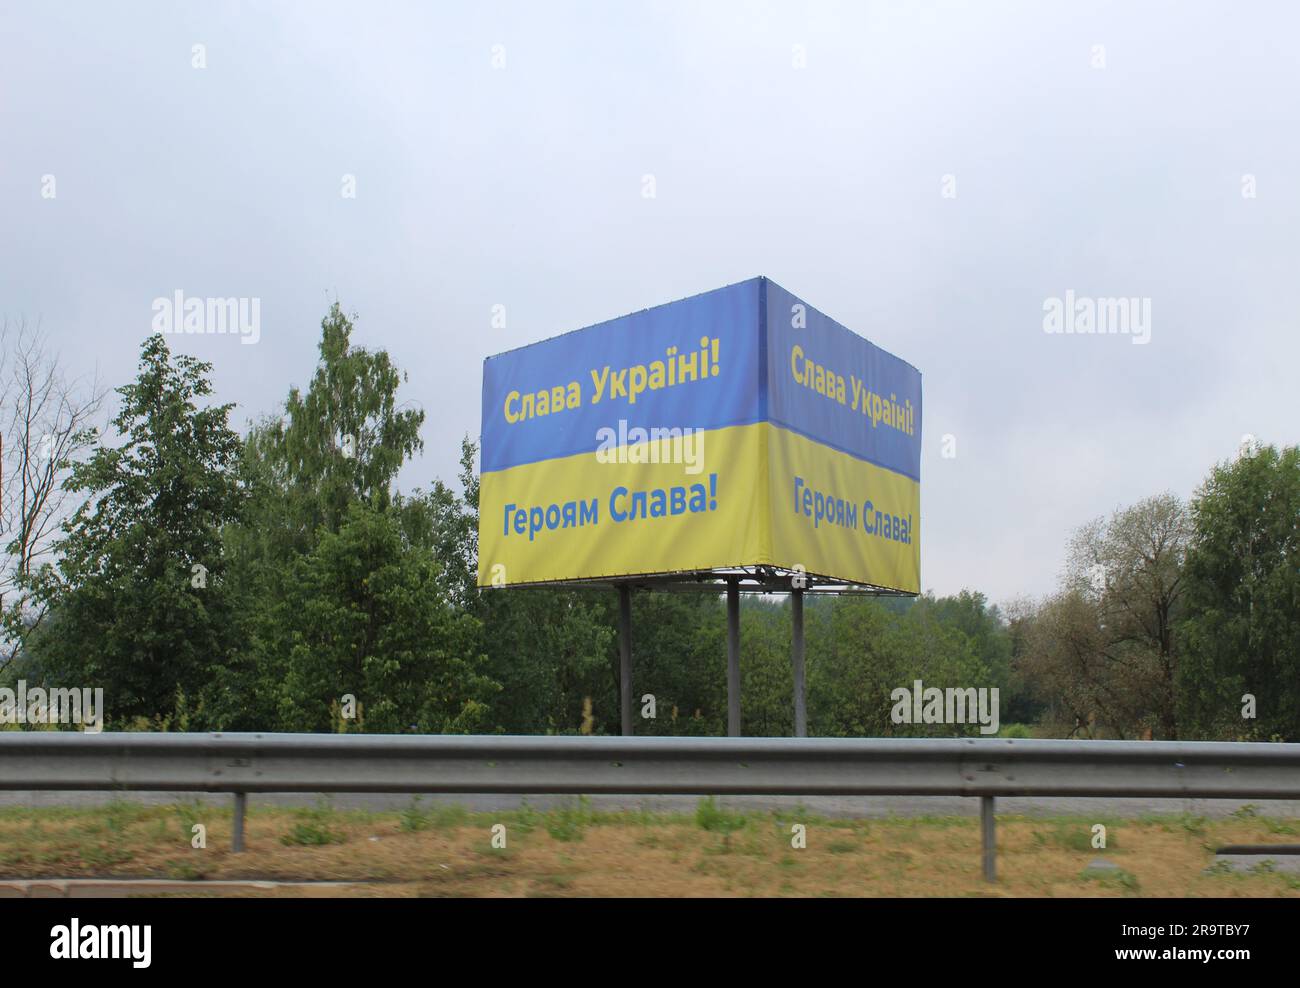 Glory to Ukraine glory to the heroes two-sided billboard in Ukrainian in Ogre, Latvia Stock Photo